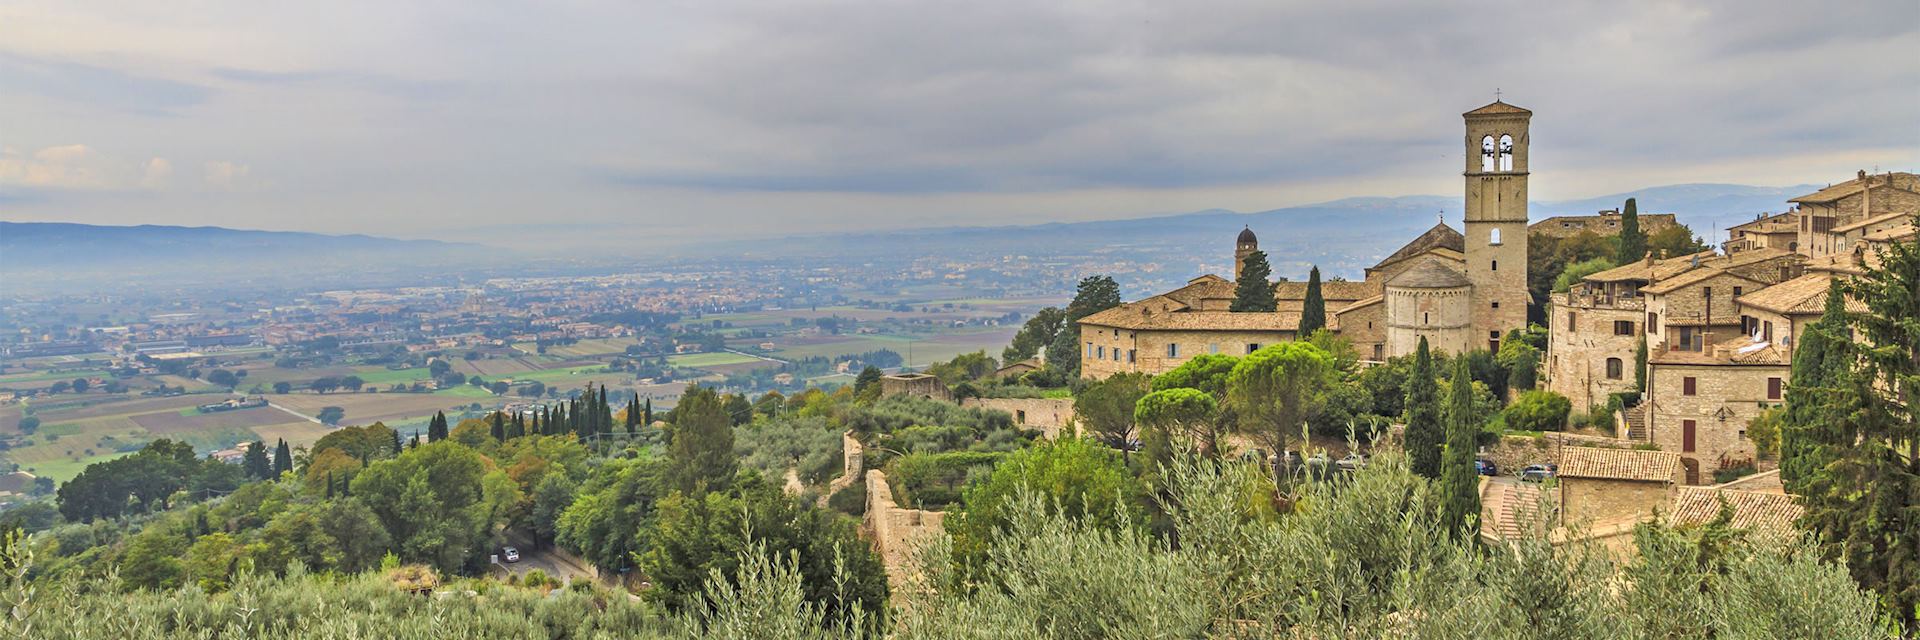 Scenic view of Umbria